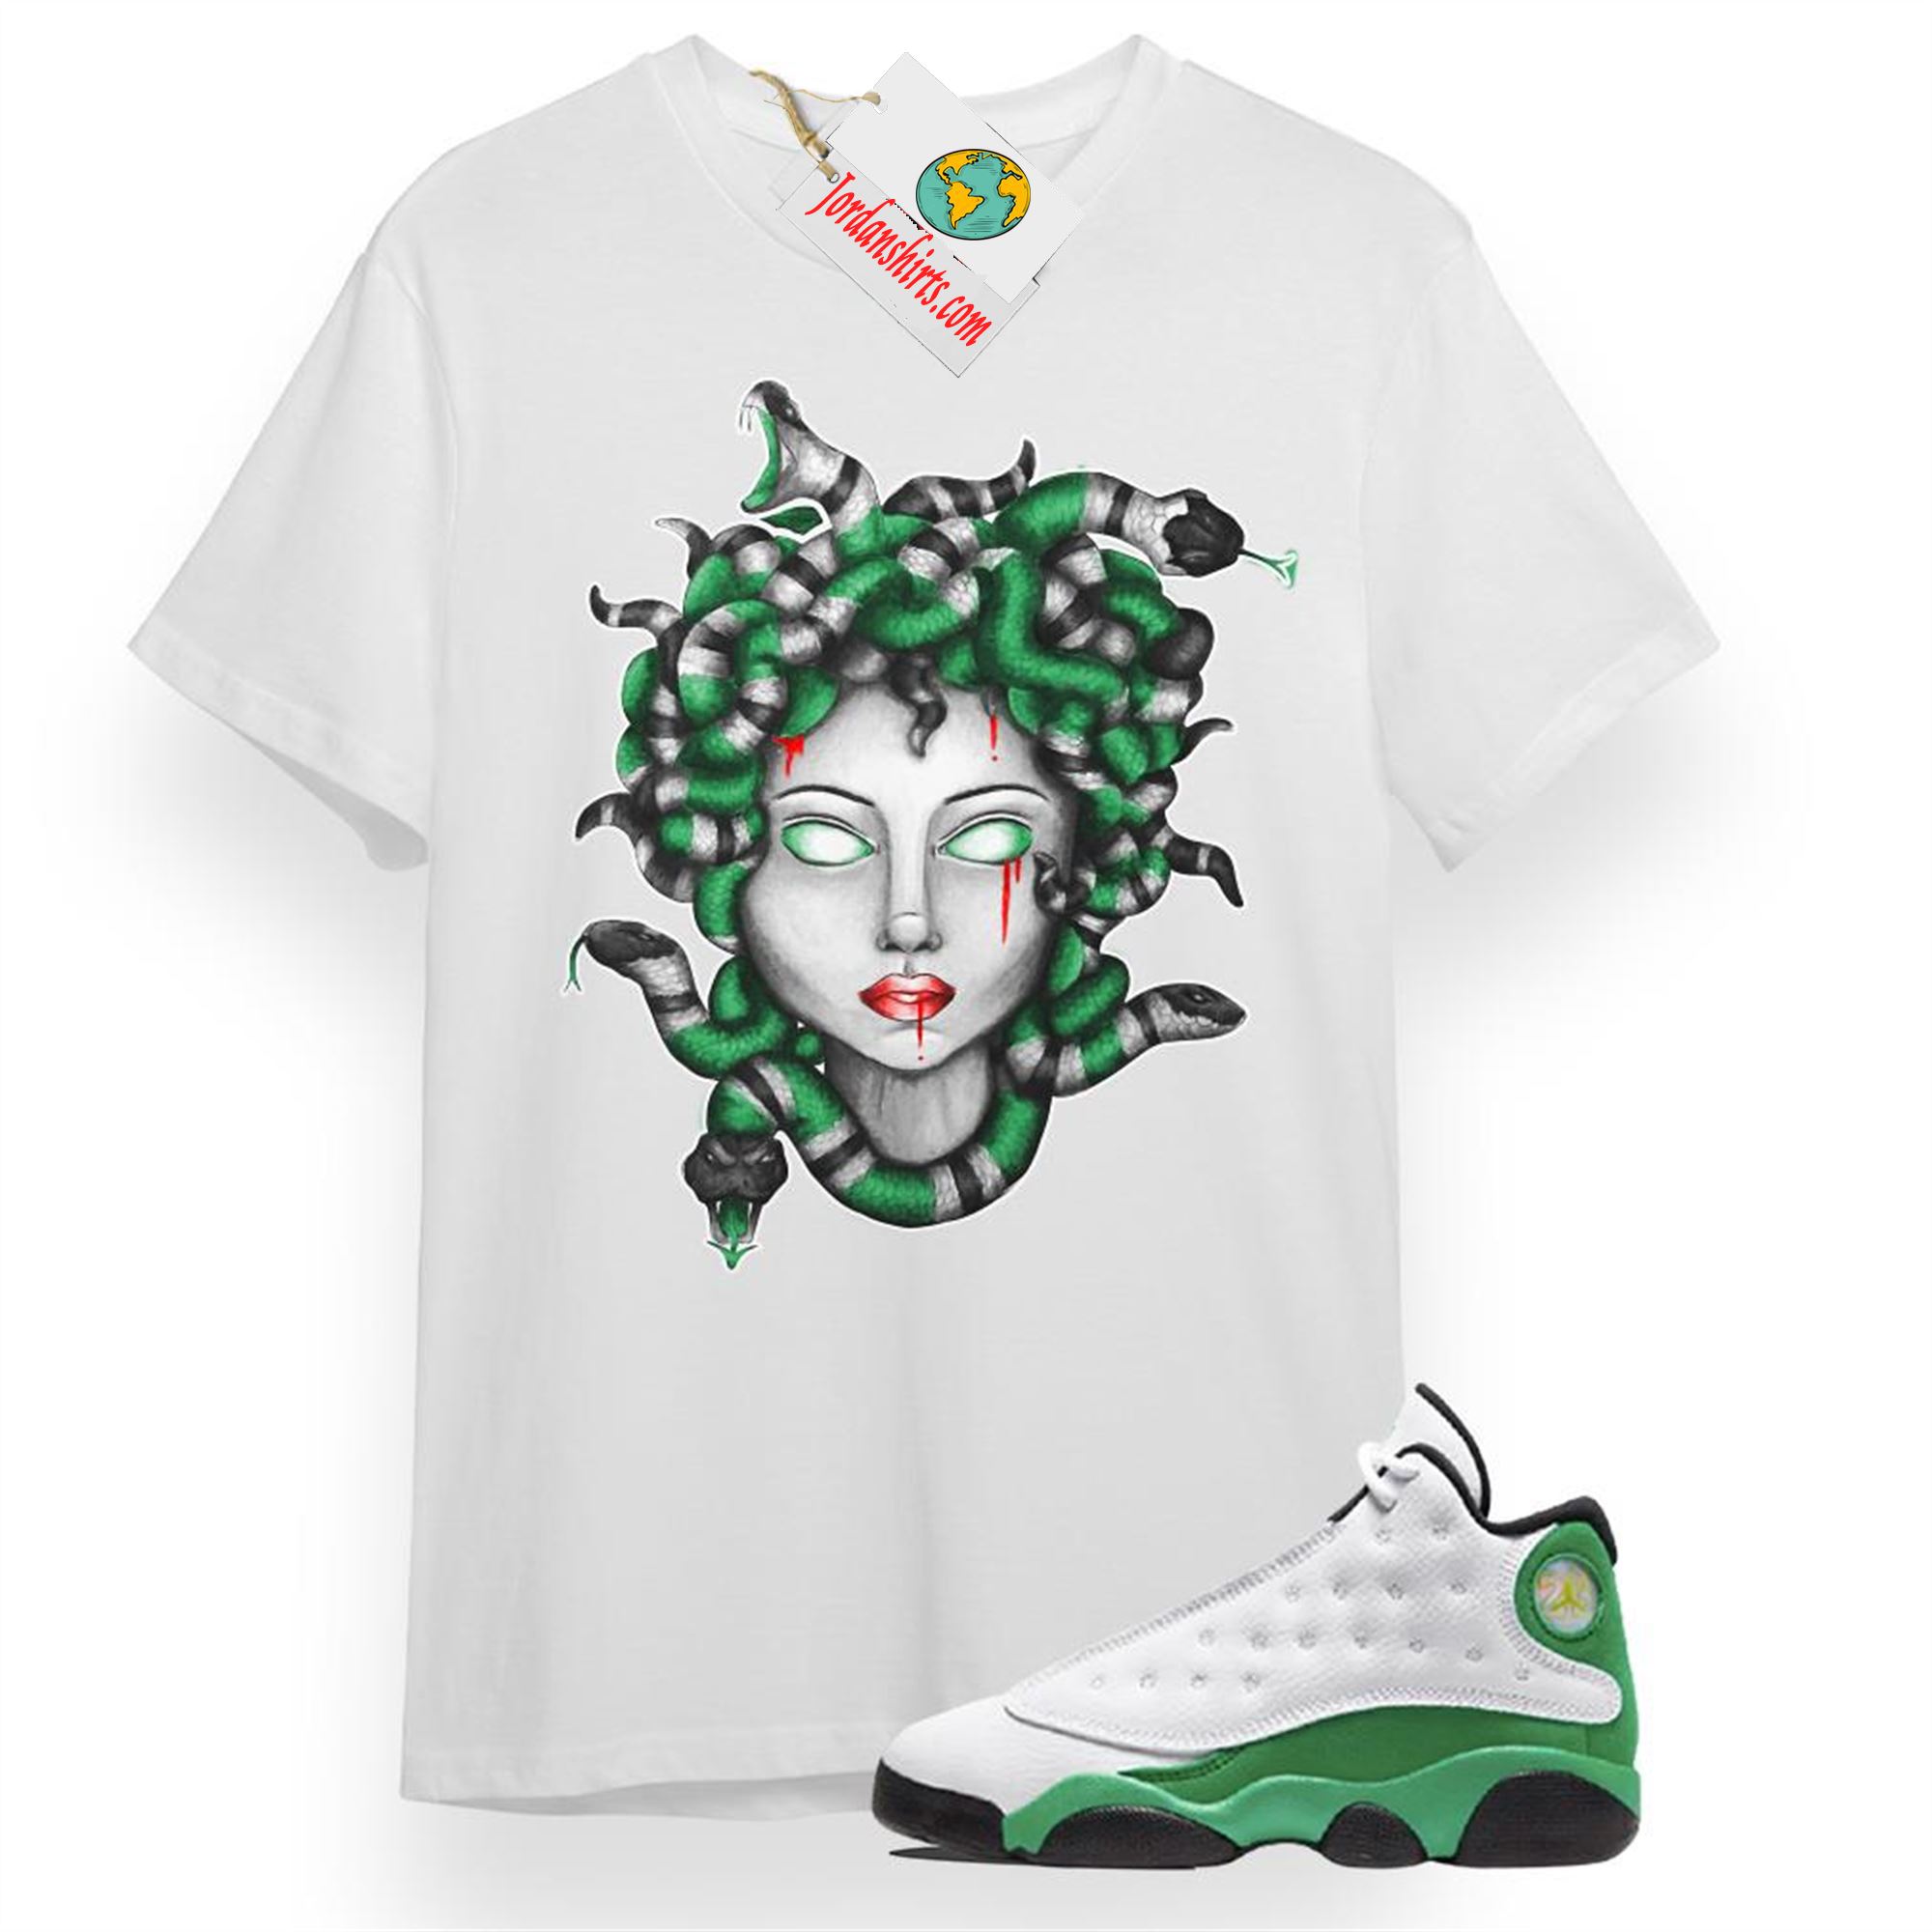 Jordan 13 Shirt, Medusa Snake White T-shirt Air Jordan 13 Lucky Green 13s Full Size Up To 5xl